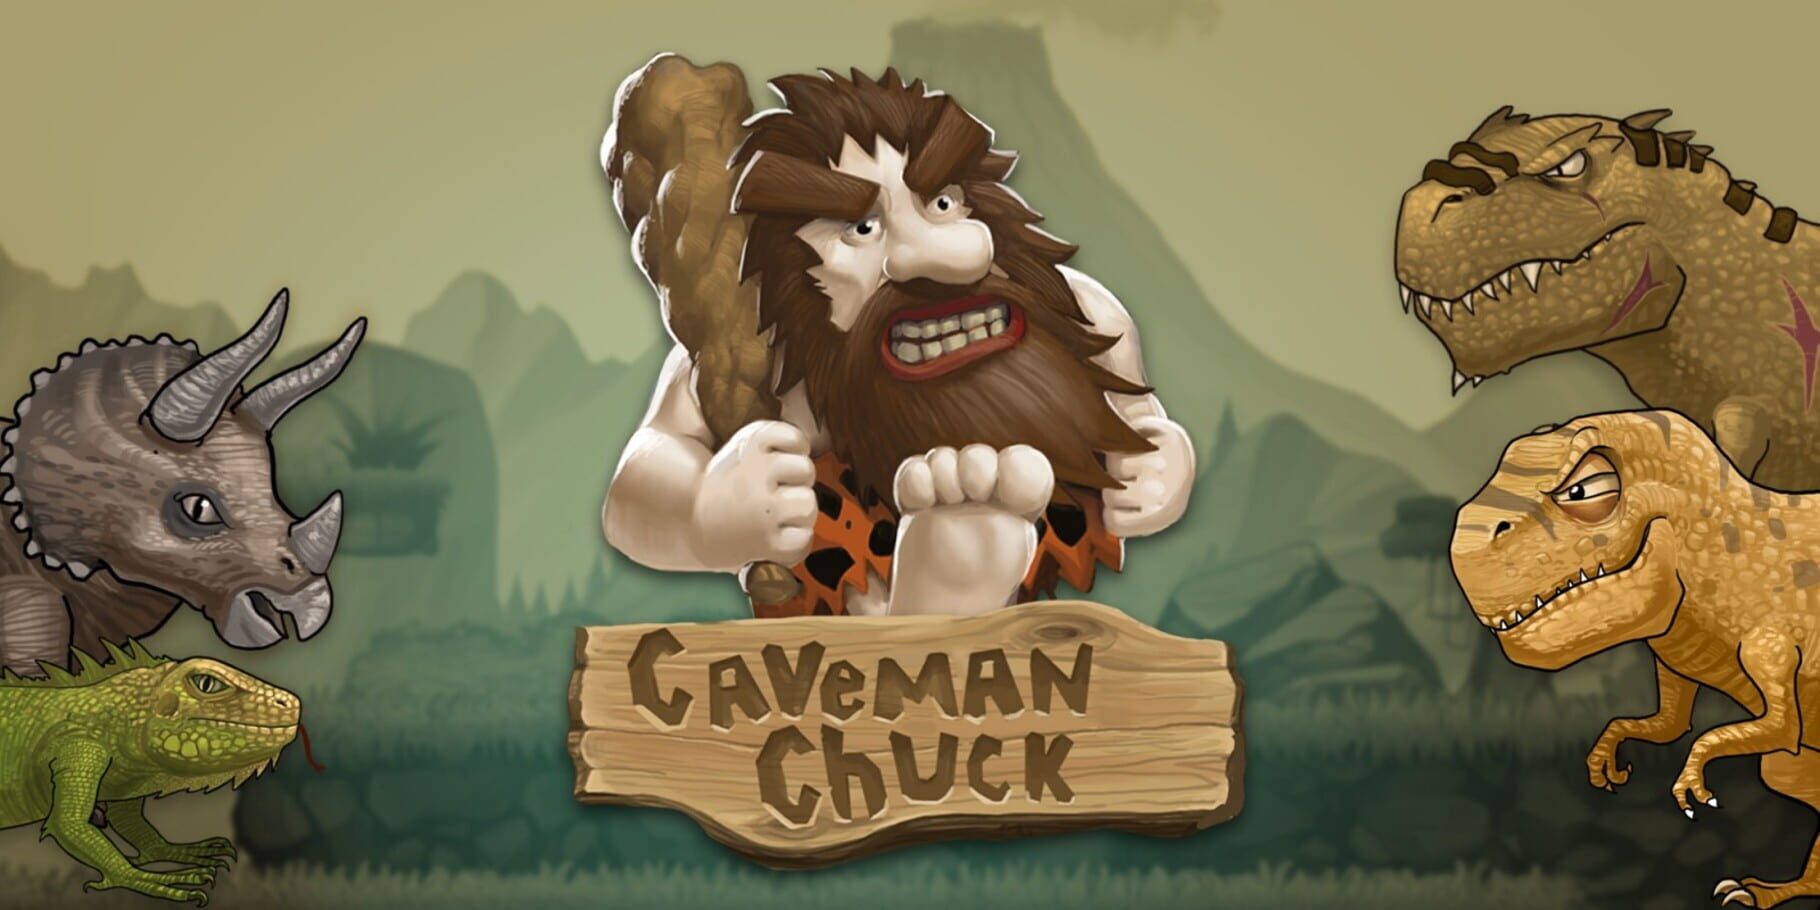 Caveman Chuck artwork